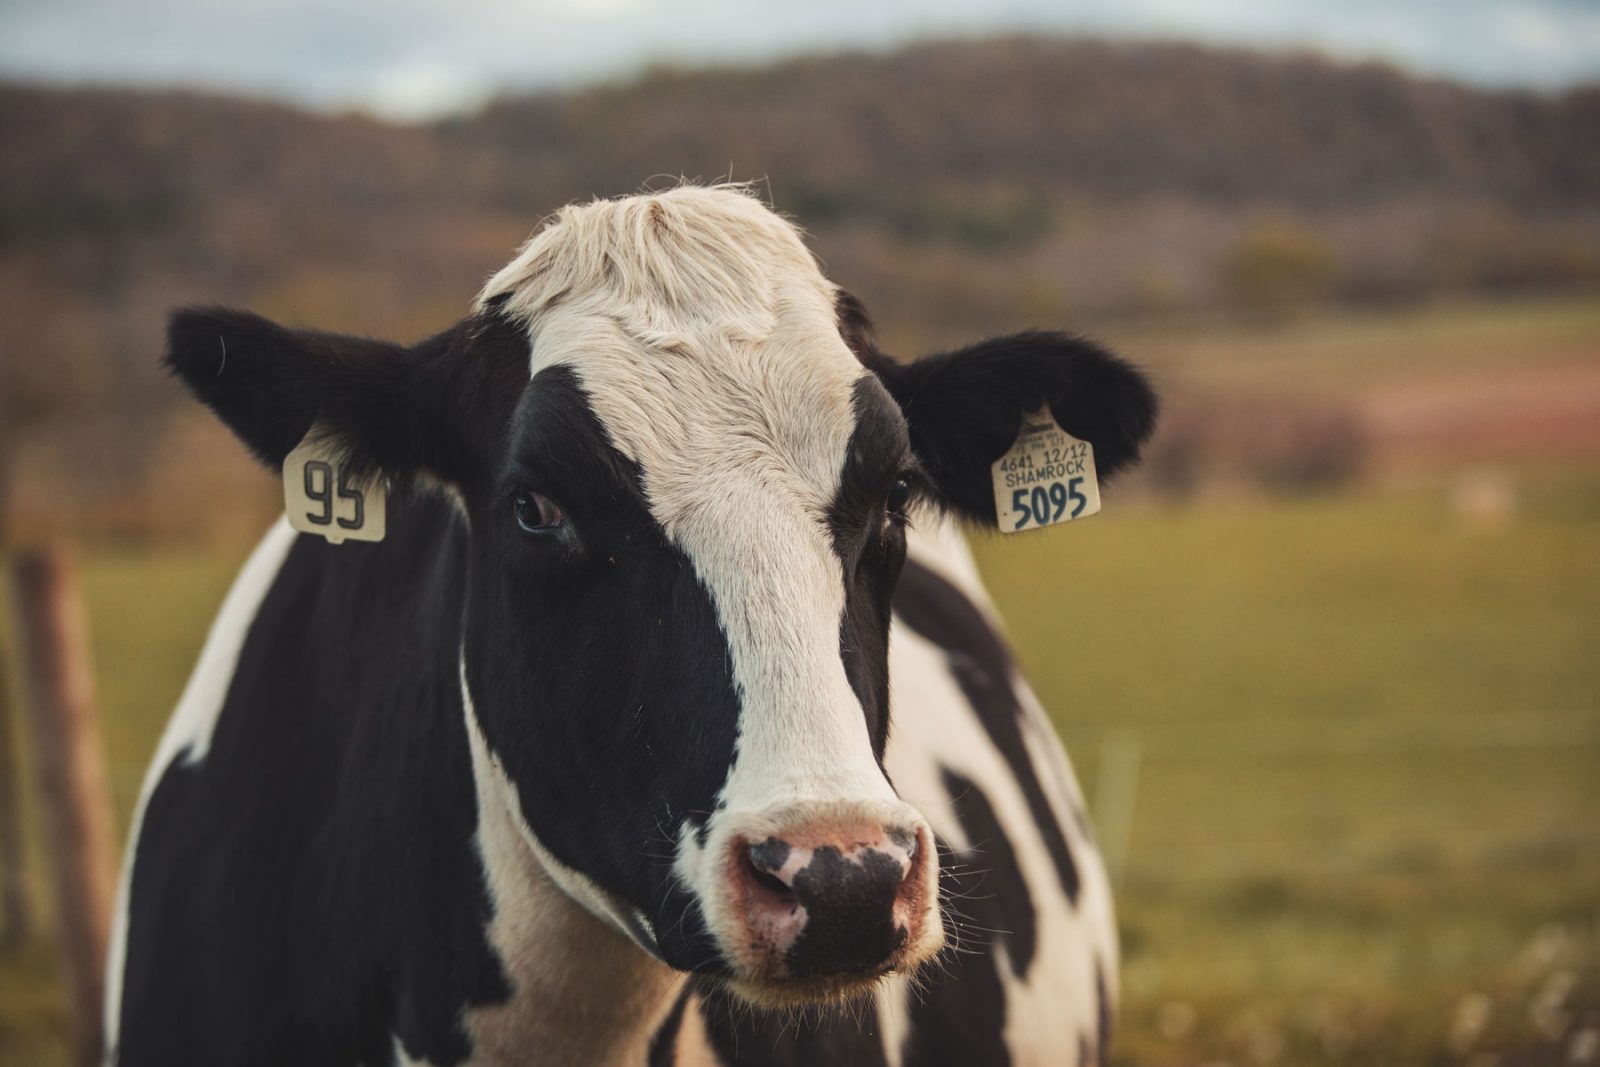 VA Tech/VMI cyber scientists protect Virginia’s dairy farms, address labor shortages